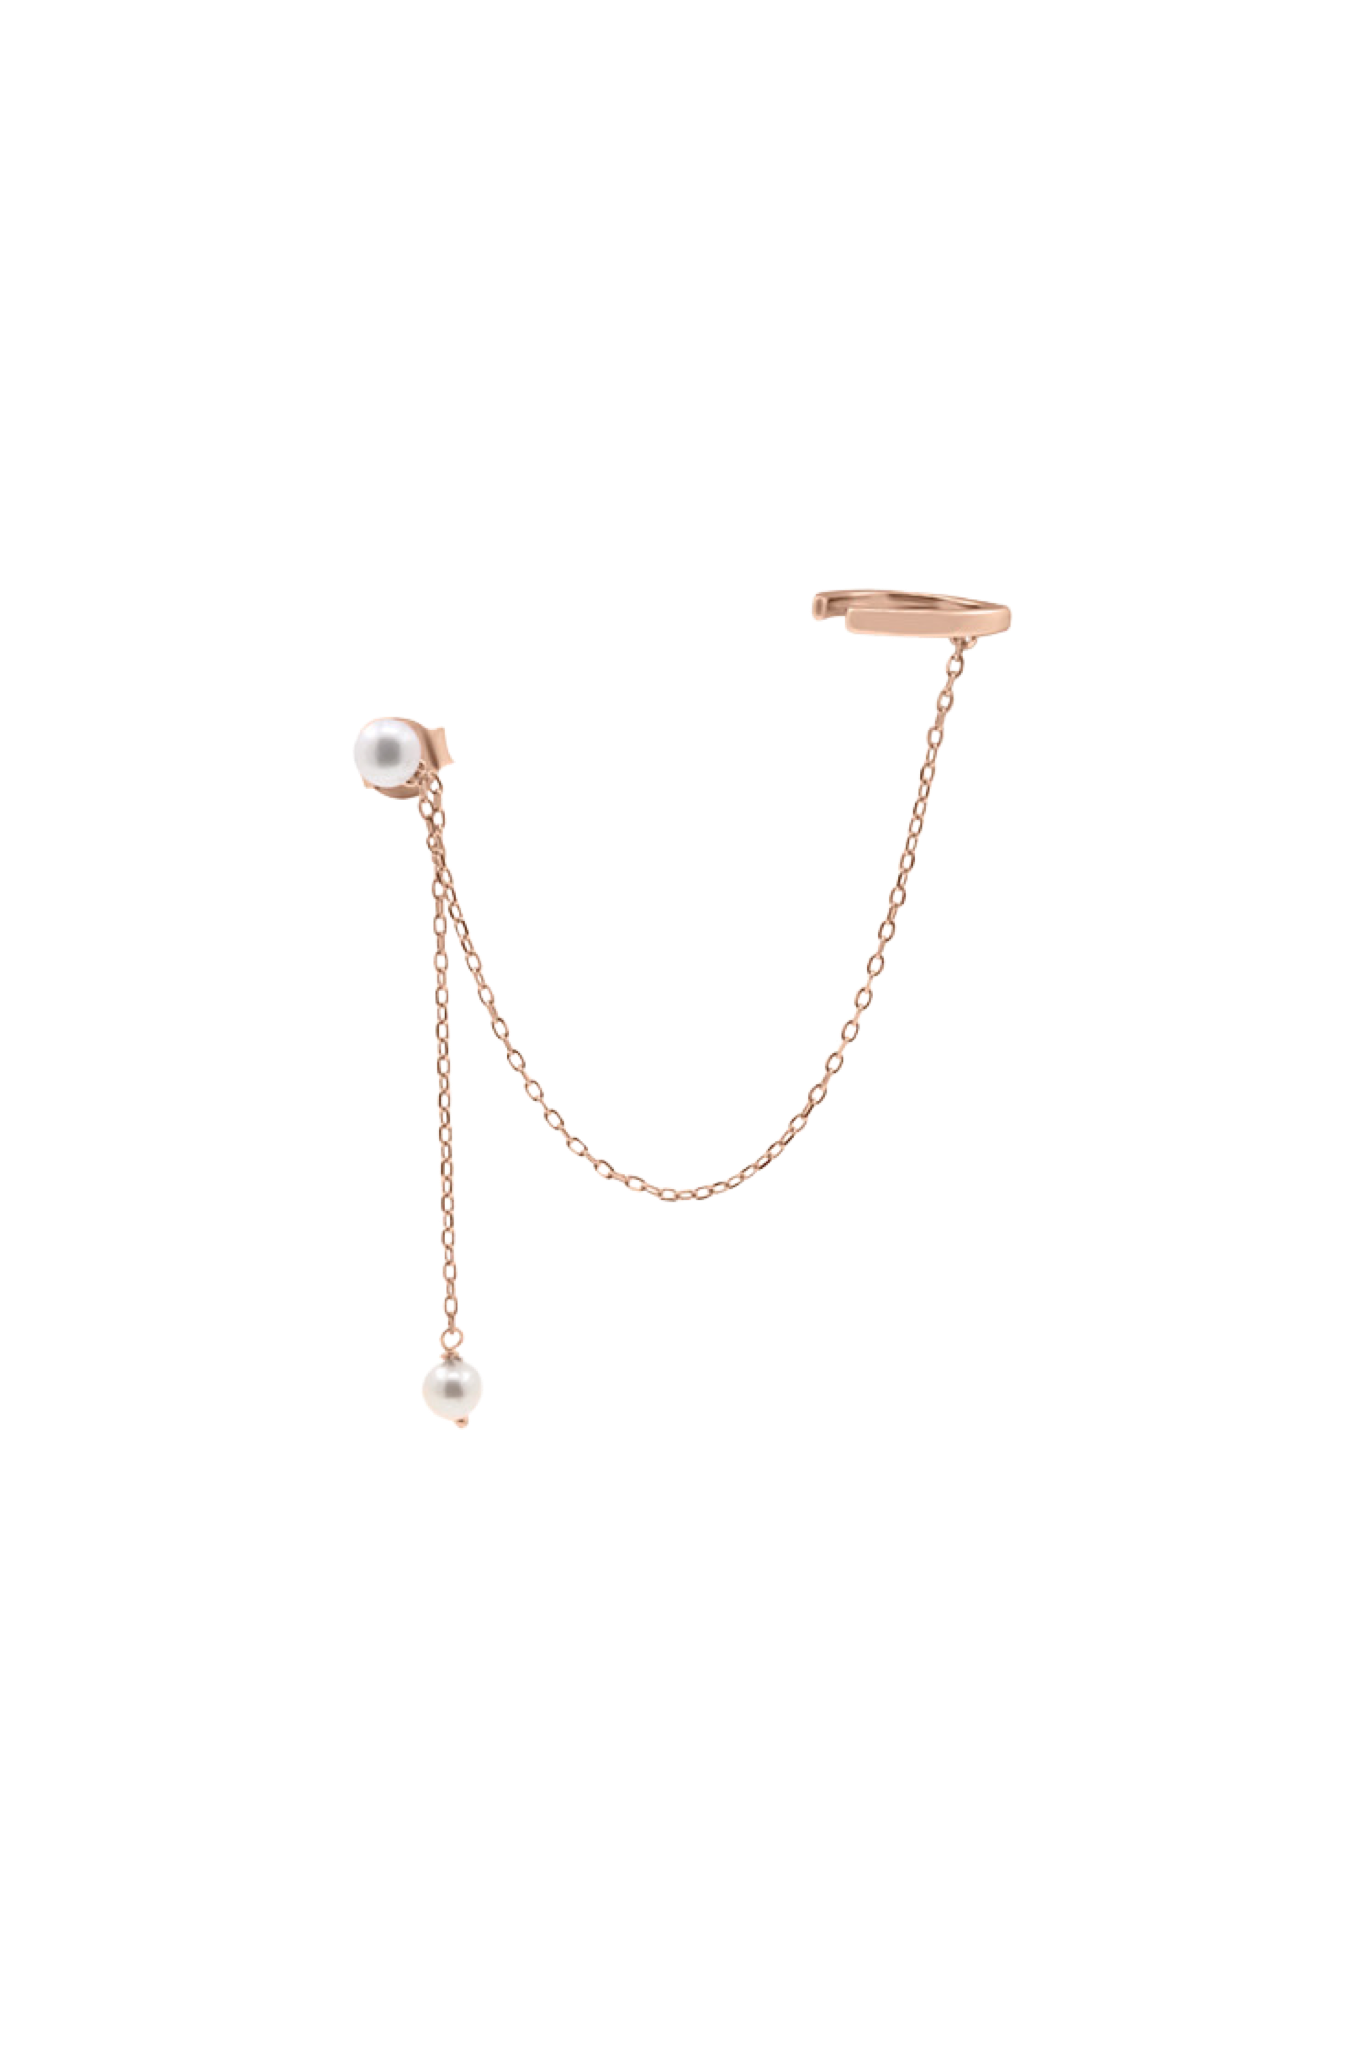 Nikol pearls earring -one earring price